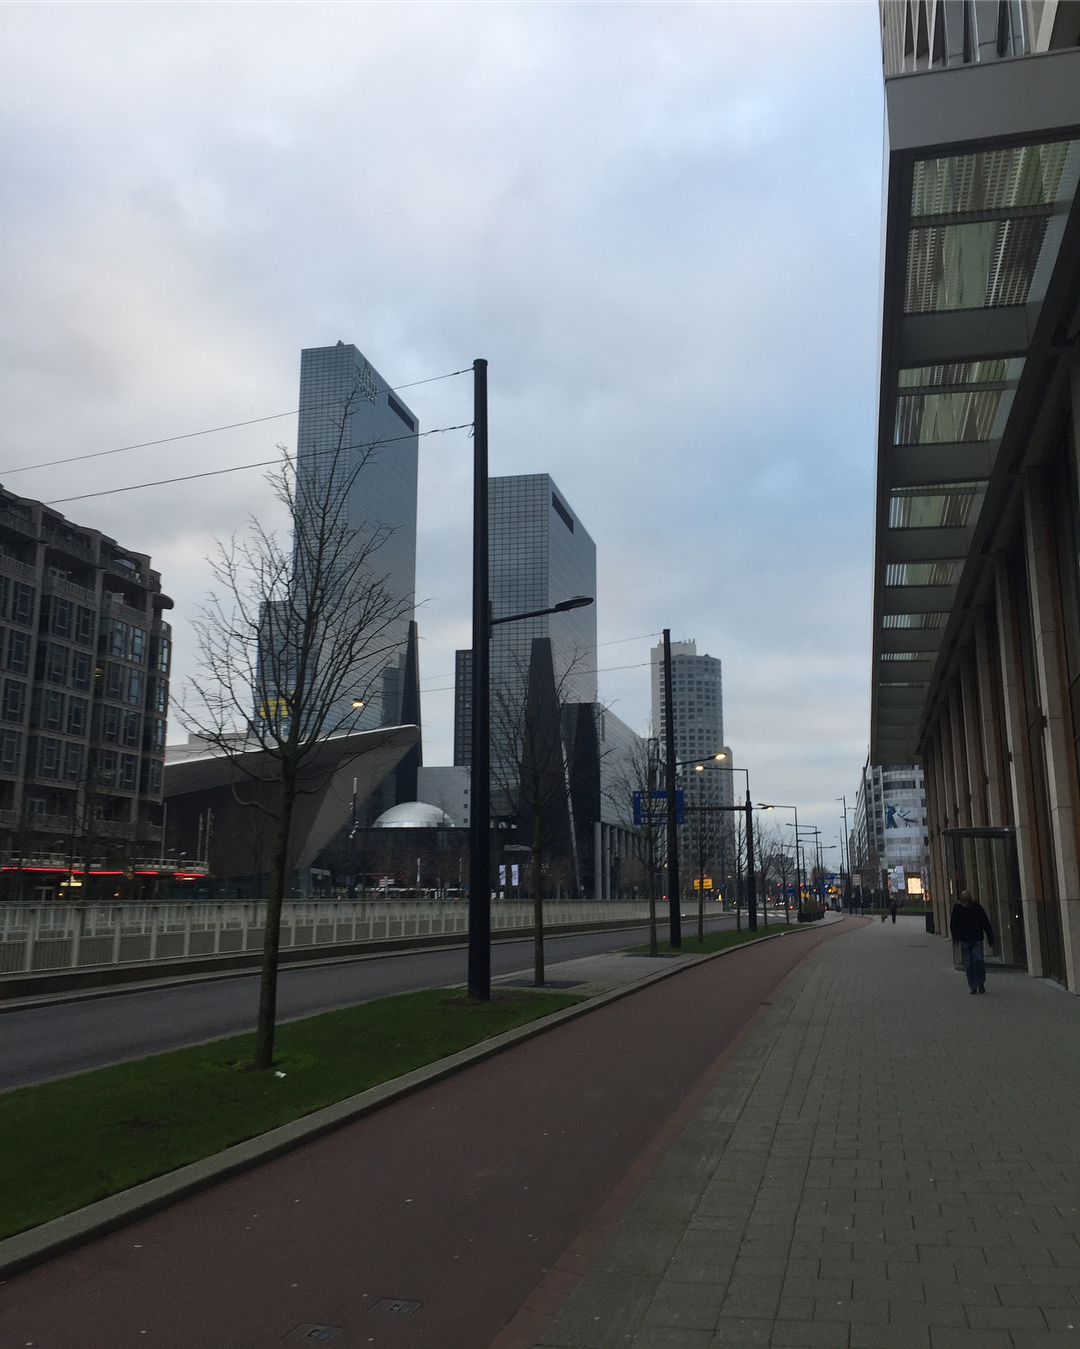 The Rotterdam street